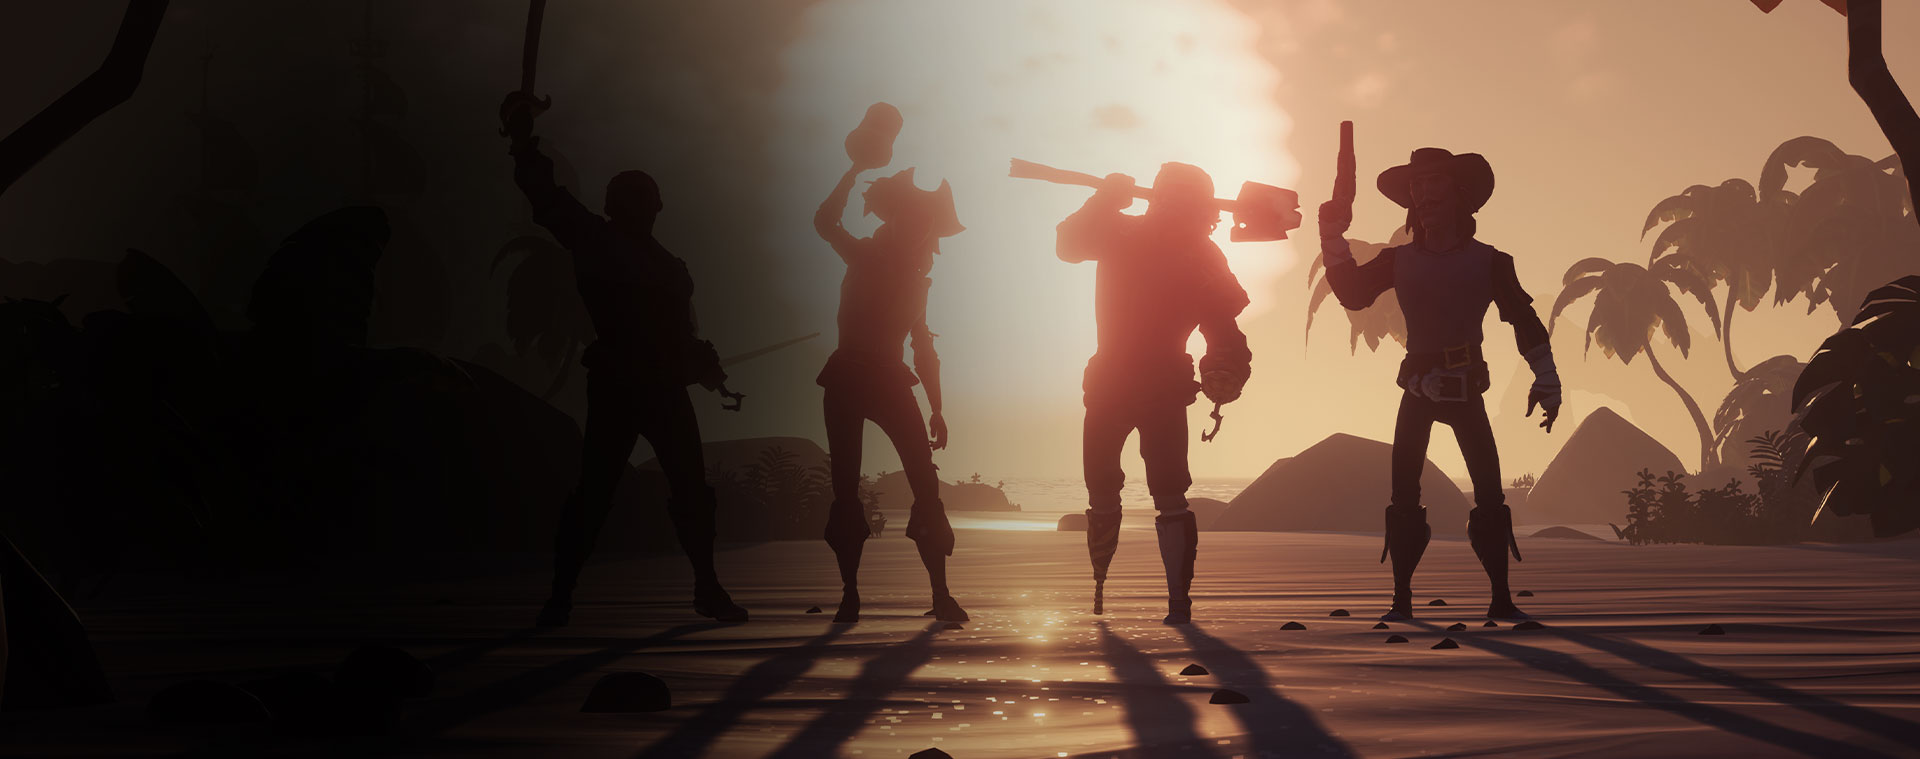 Четыре персонажа из игры Sea of Thieves позируют на фоне заката